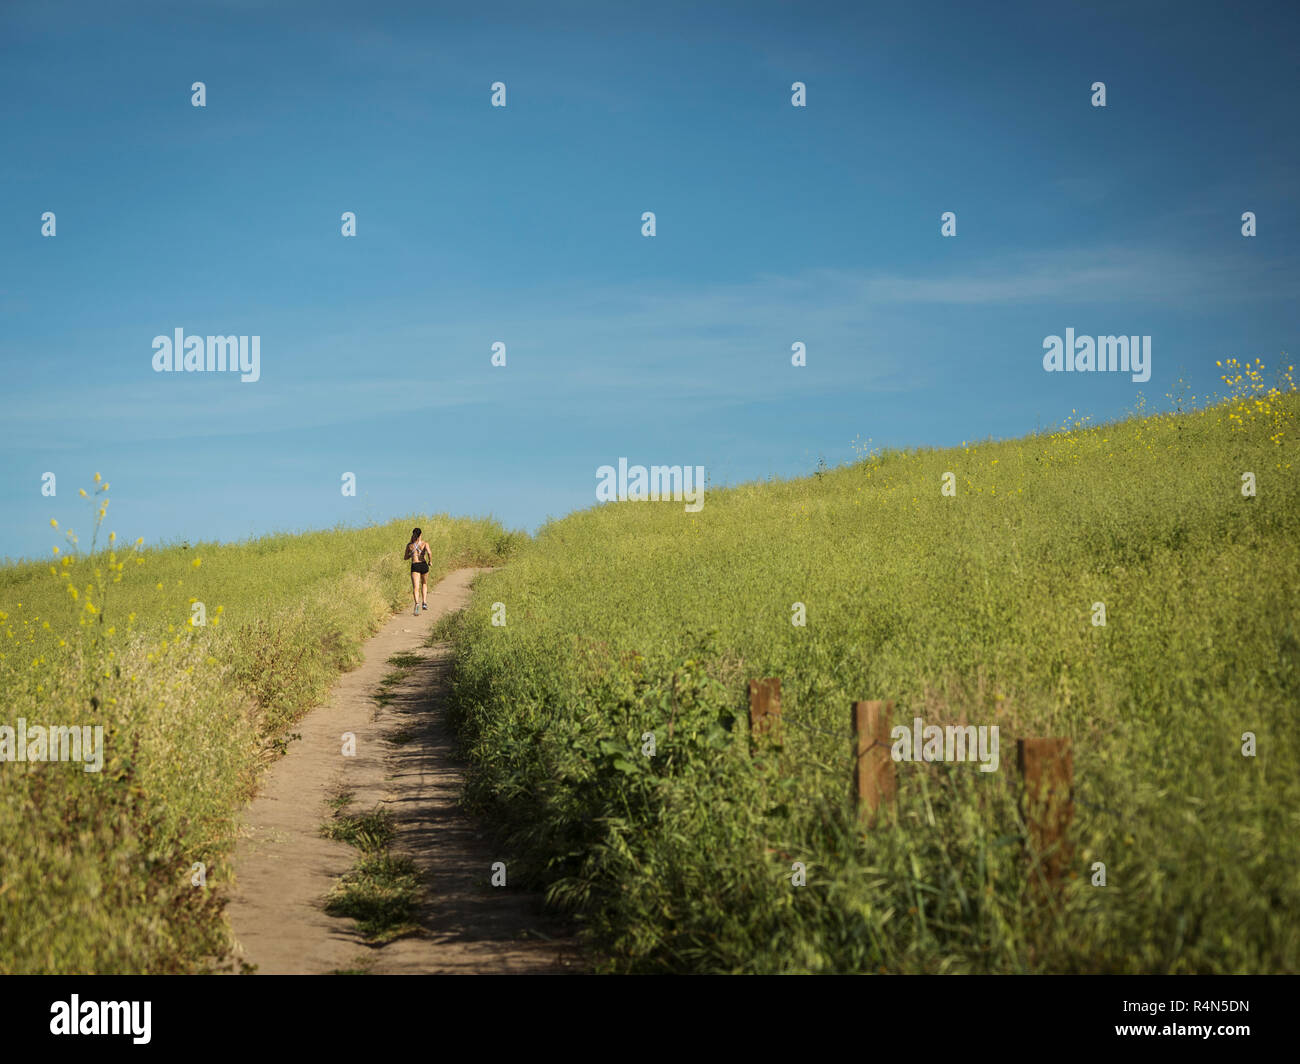 Woman jogging on path through field Stock Photo